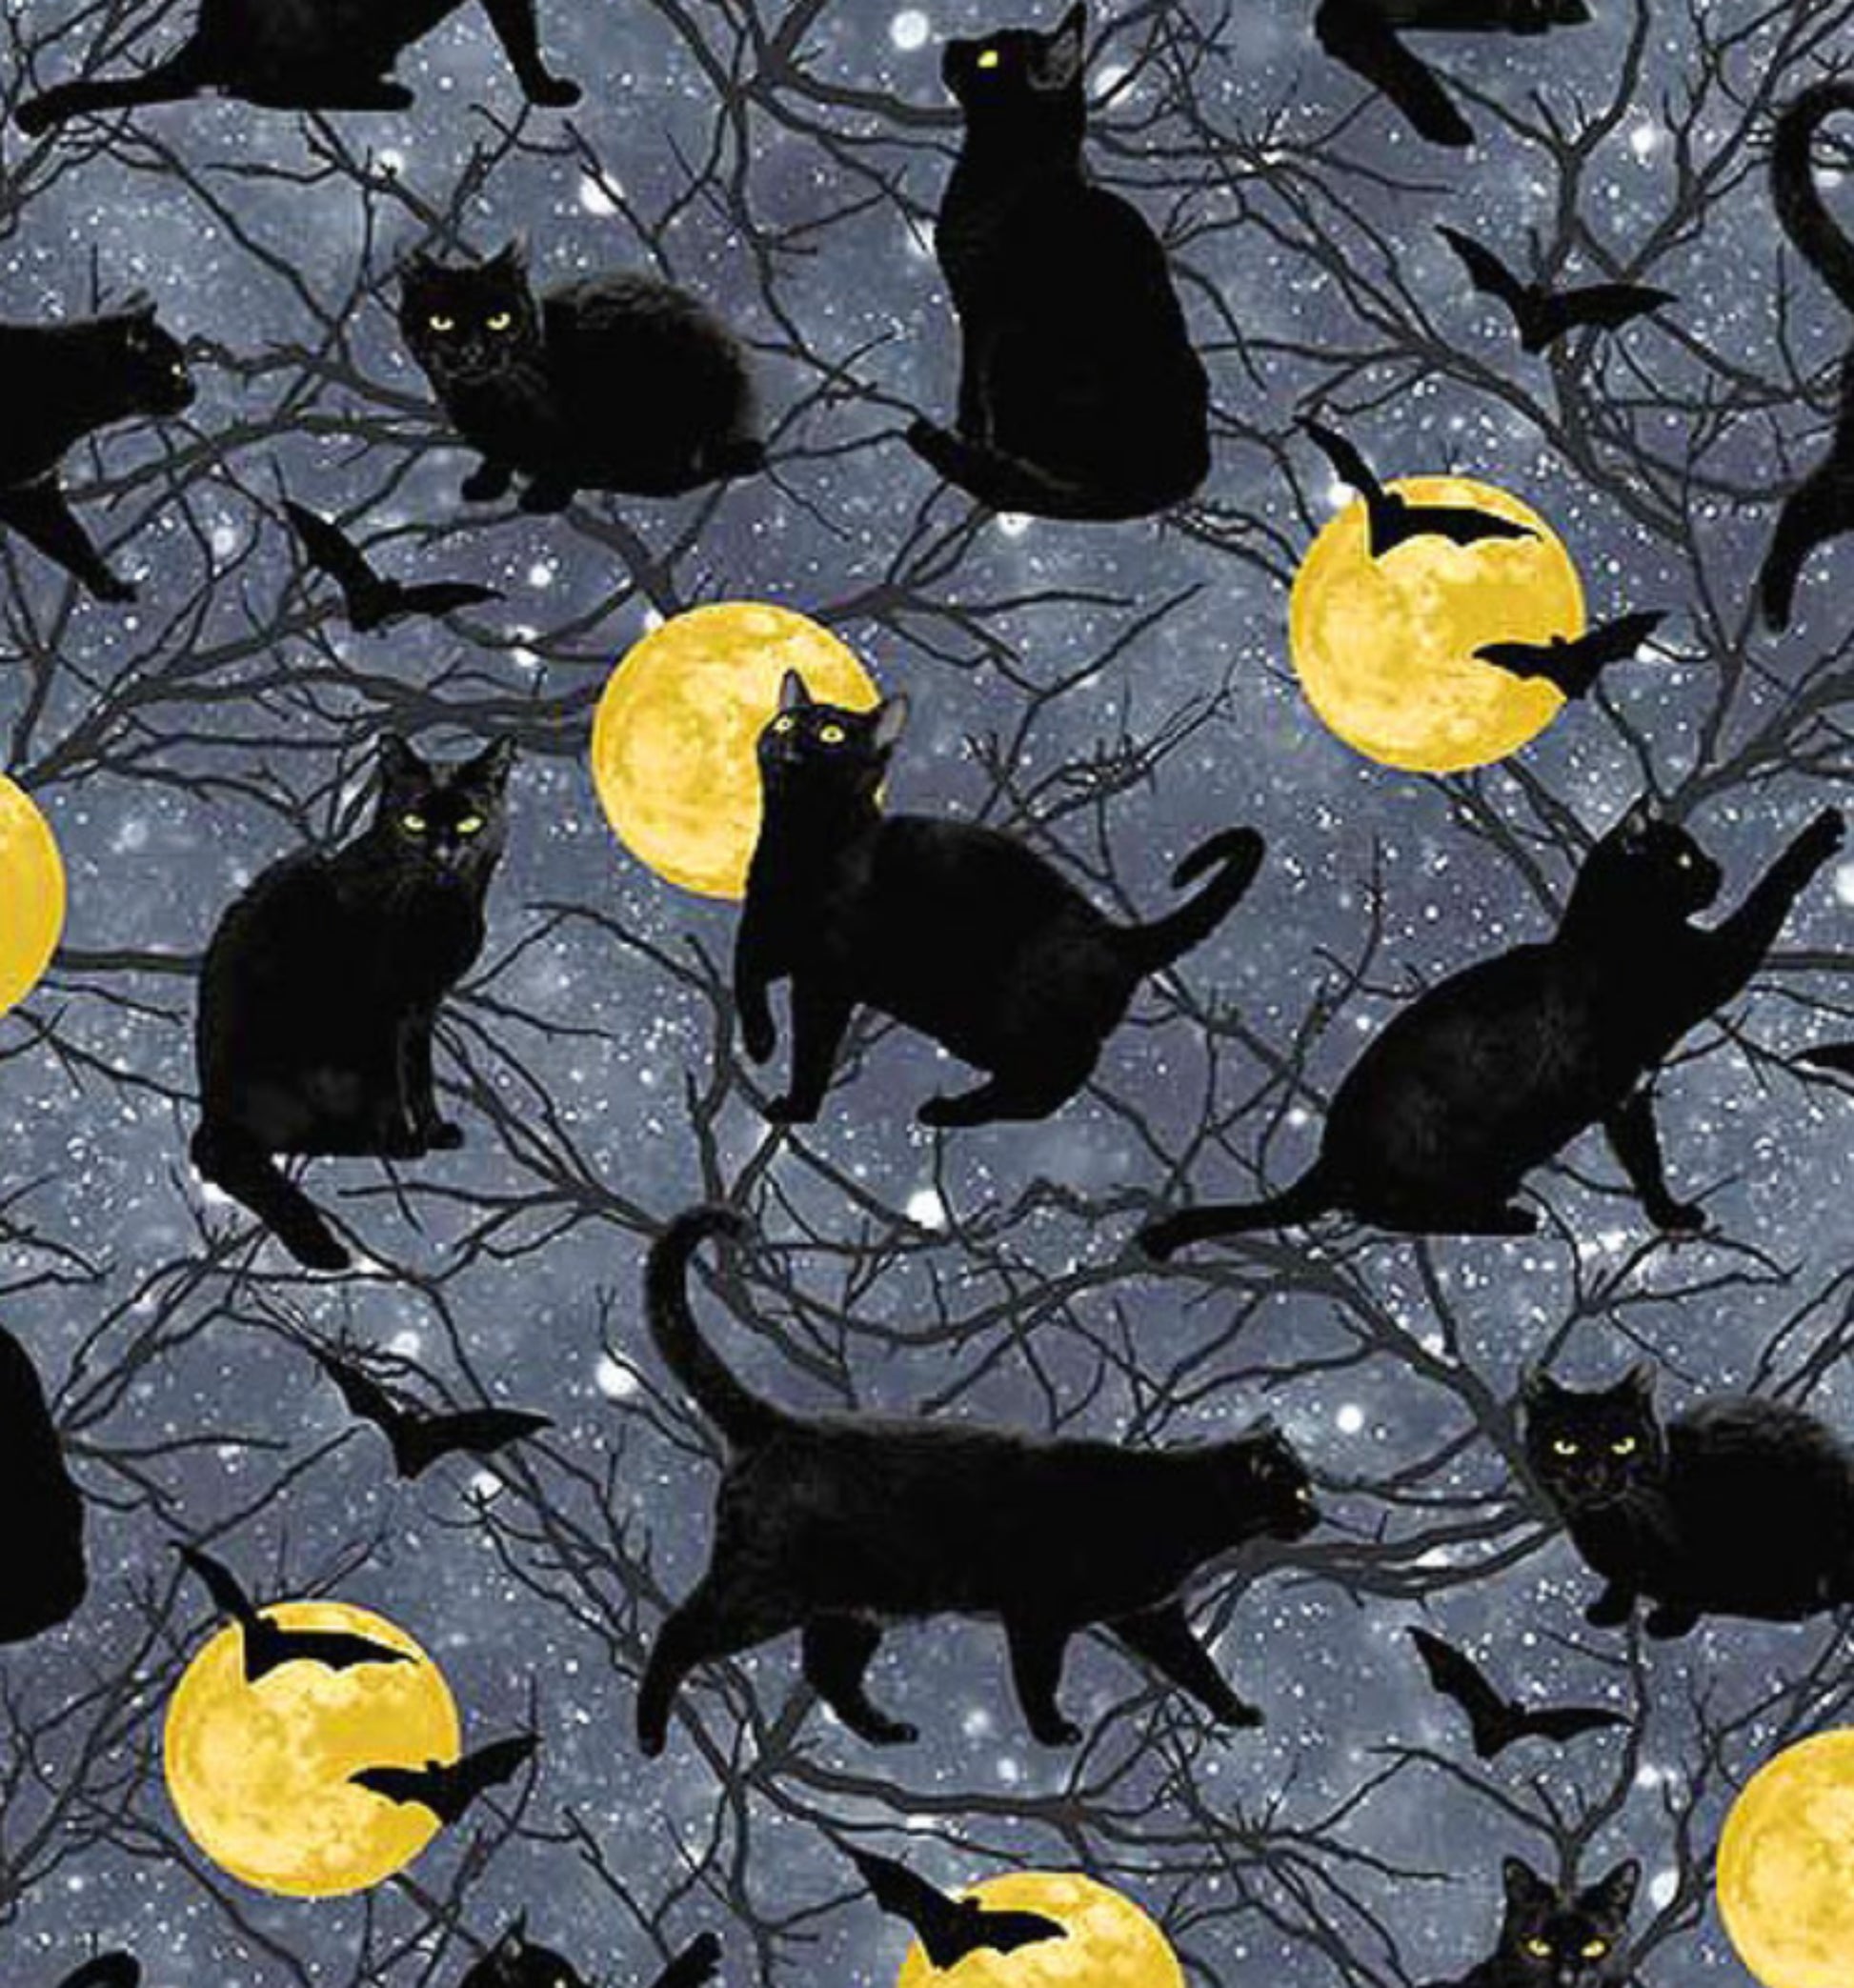 Hocus Pocus - Moons & Cats Halloween Themed fabric by Deborah Edwards for Northcott Fabrics